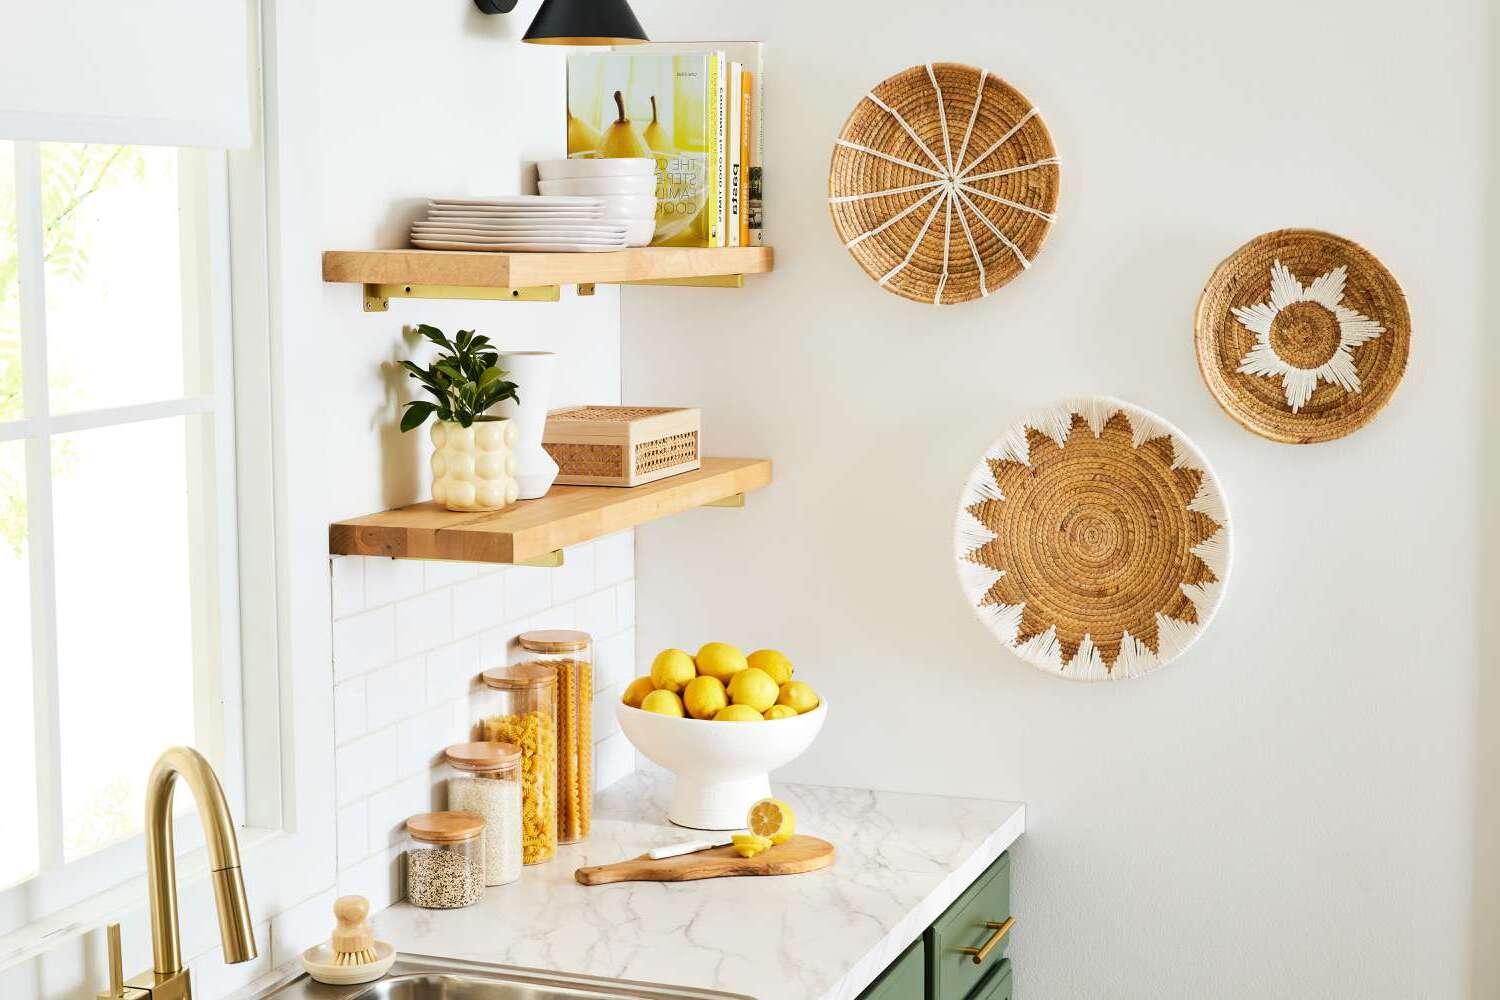 DIY Kitchen Wall Decor Ideas